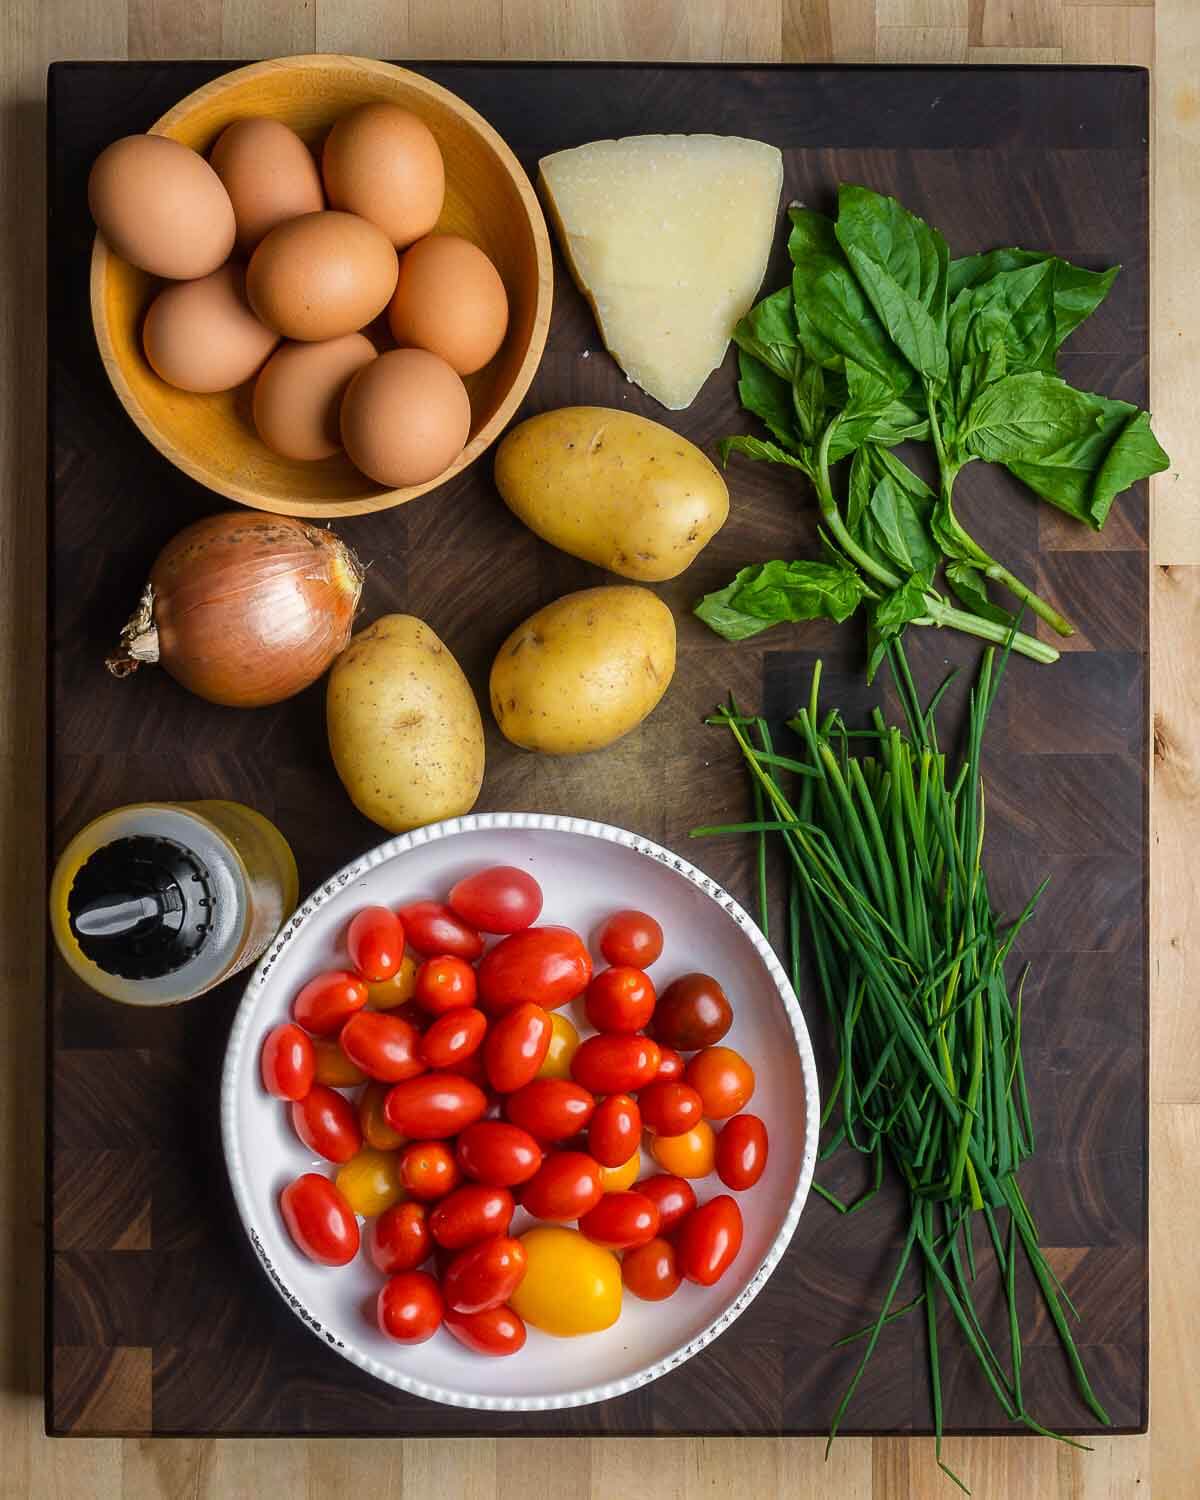 Ingredients shown: eggs, Pecorino Romano, basil, onion, potatoes, chives, olive oil, and potatoes.